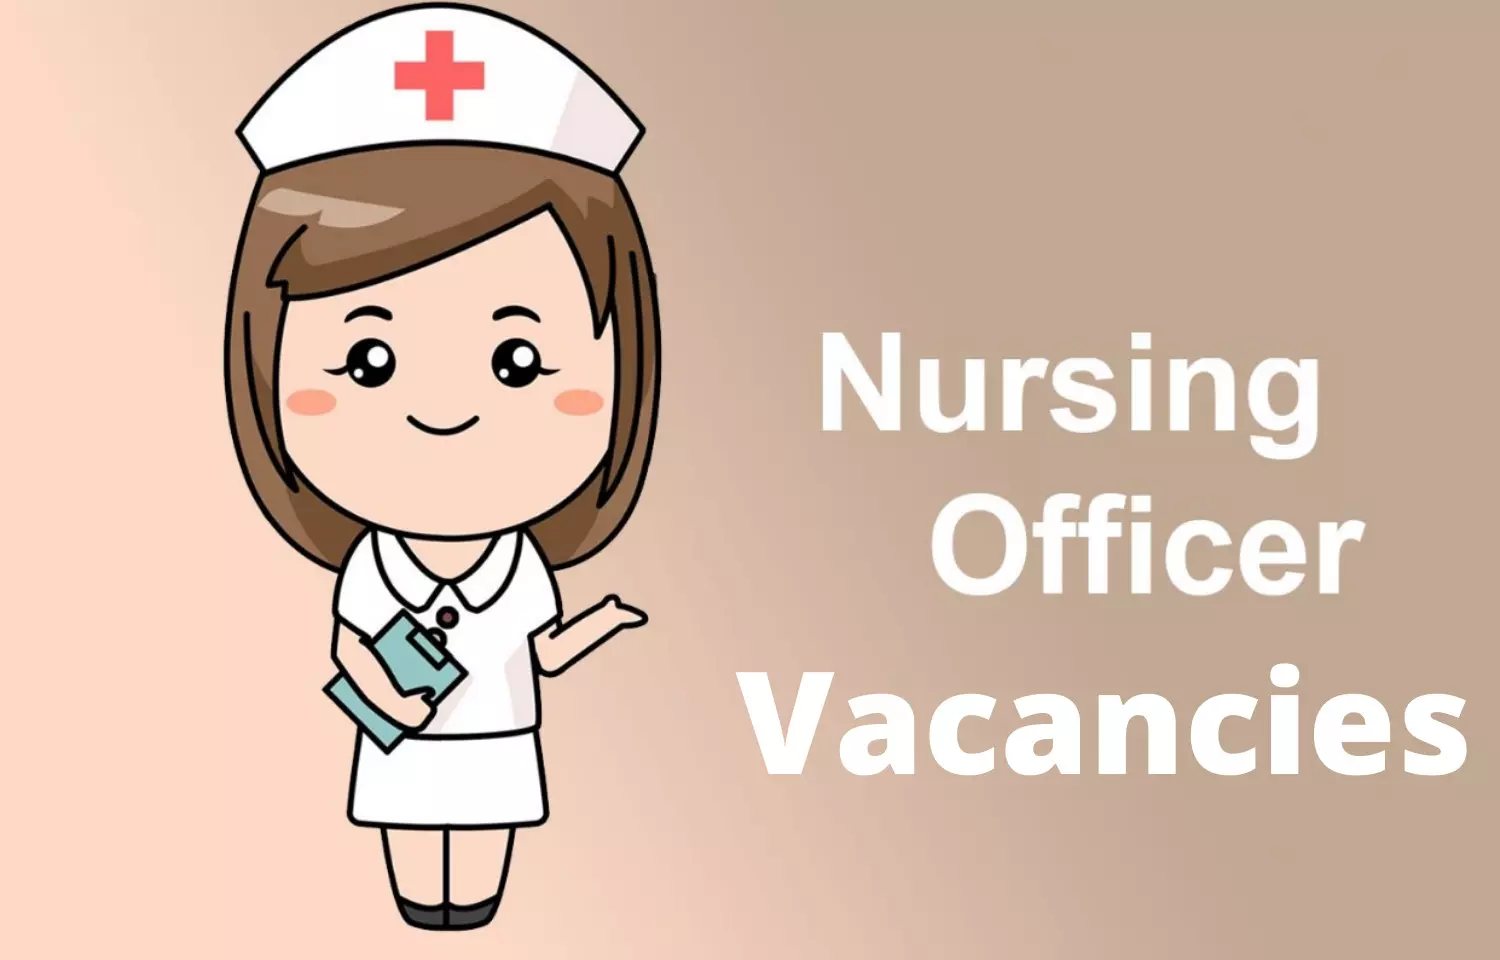 NORCET 2021: Apply Now for 678 Nursing officer vacancies at Central Govt Hospitals, Details